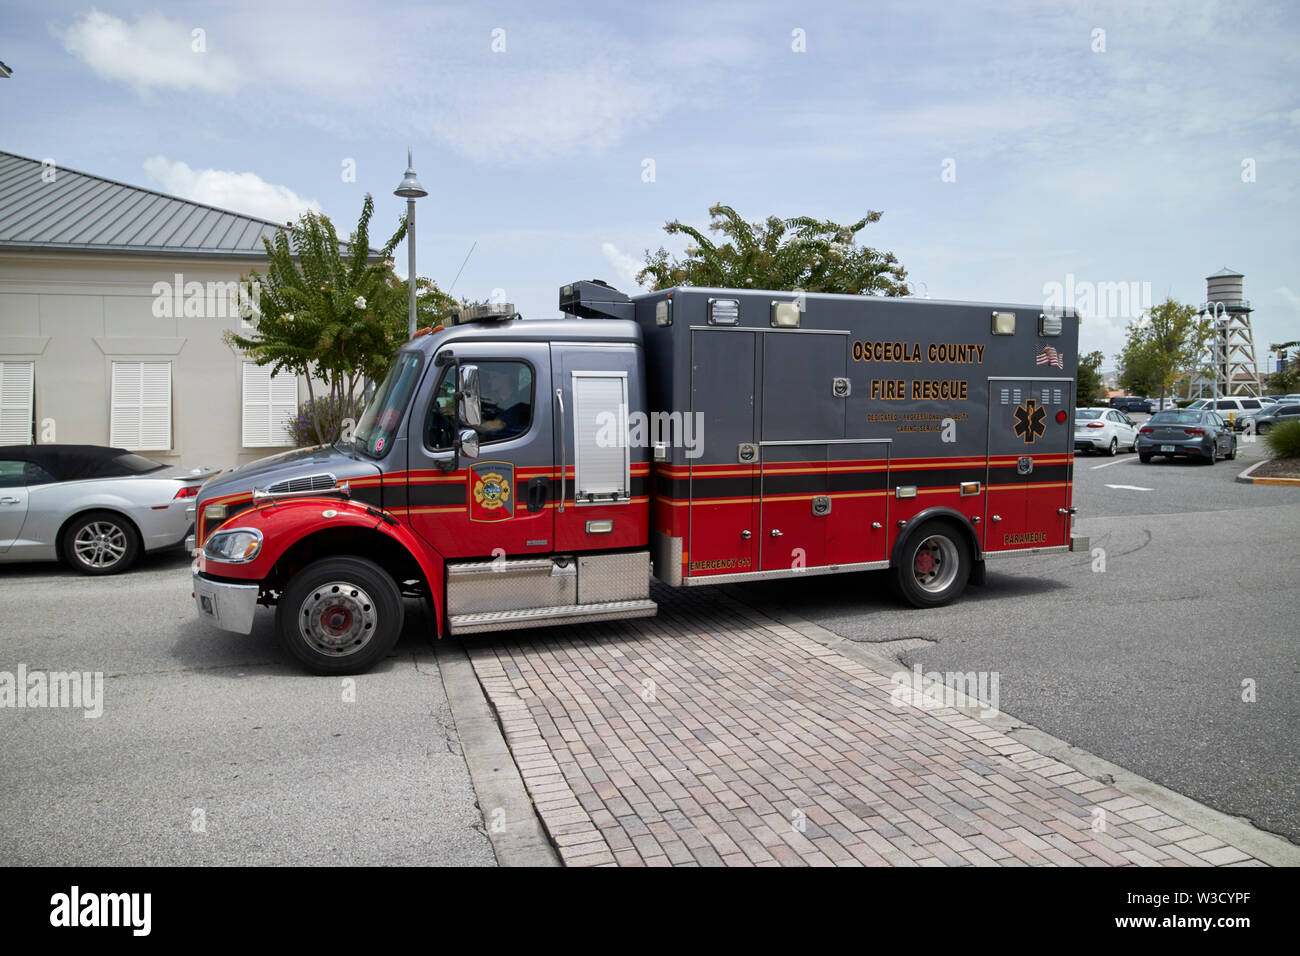 Osceola county emergency services fire rescue paramedic ambulance florida united states of america Stock Photo